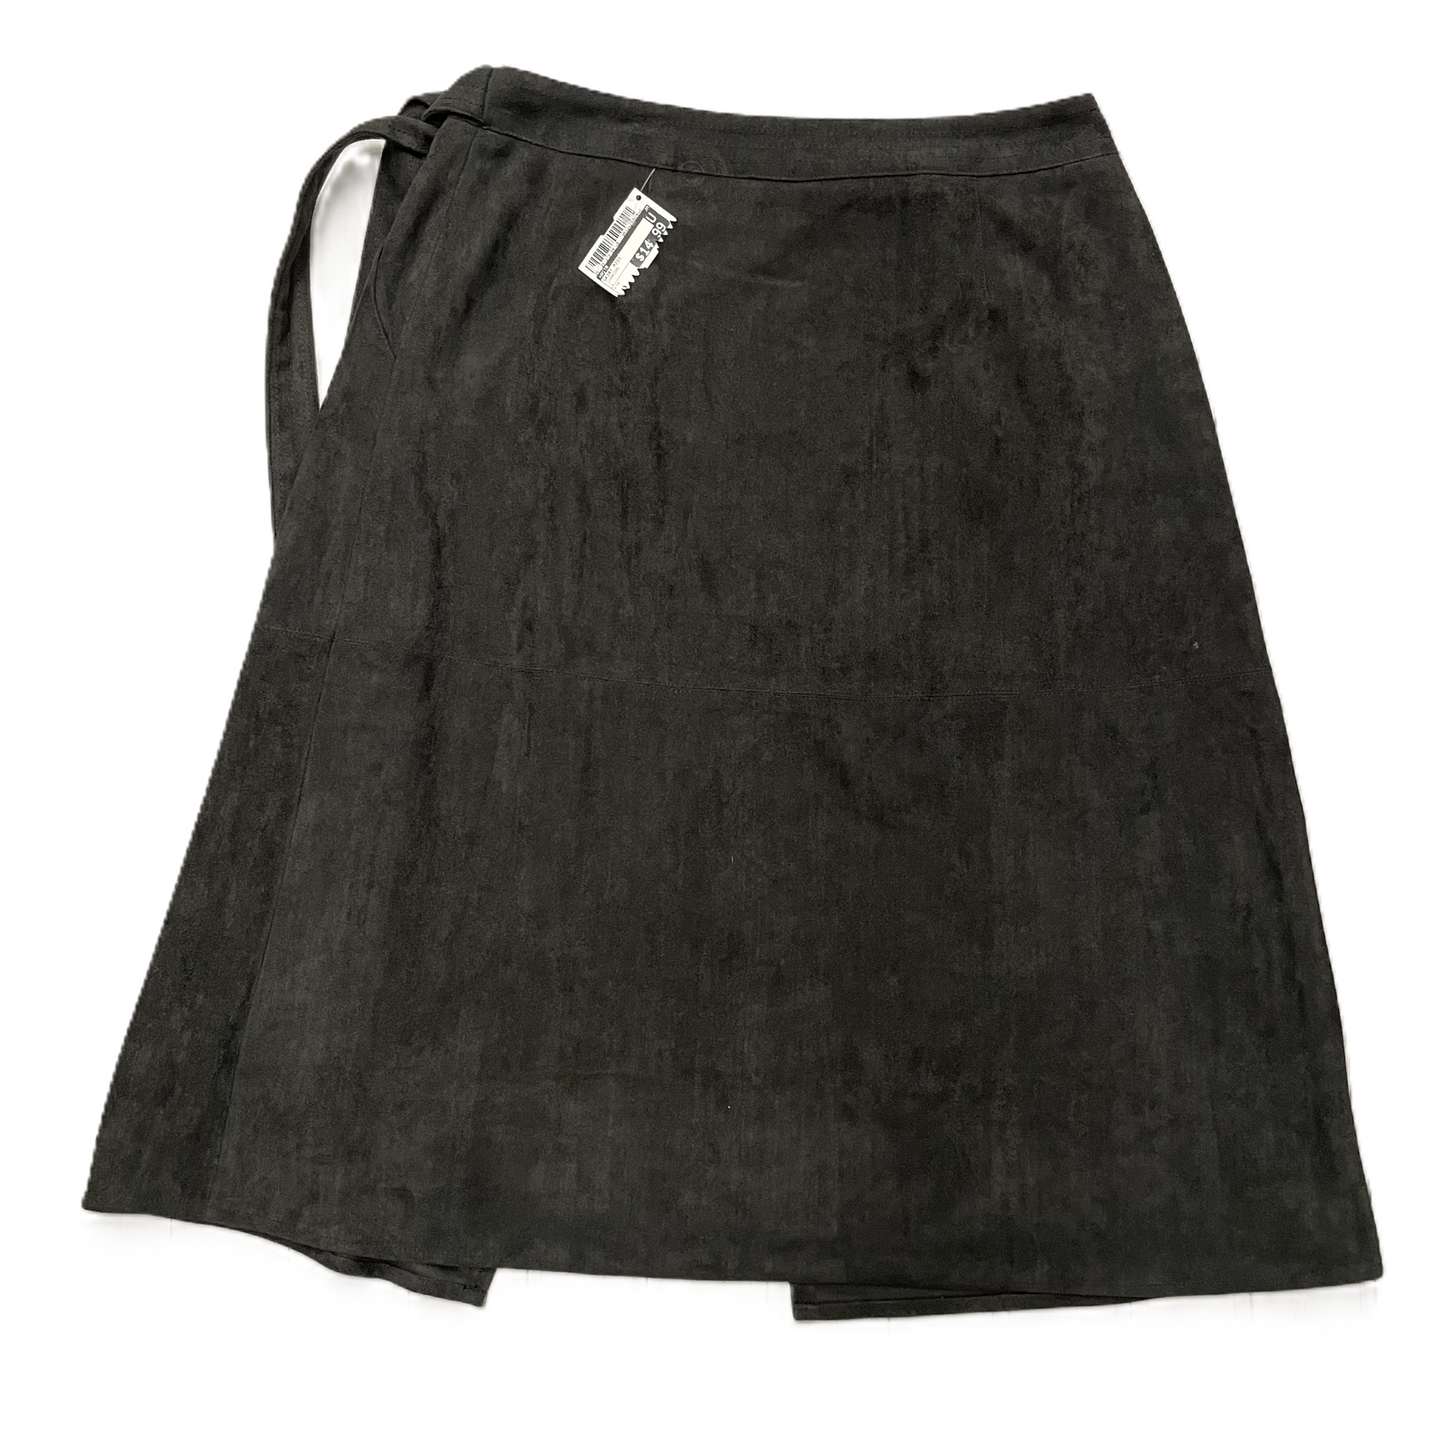 Skirt Midi By Astr  Size: L